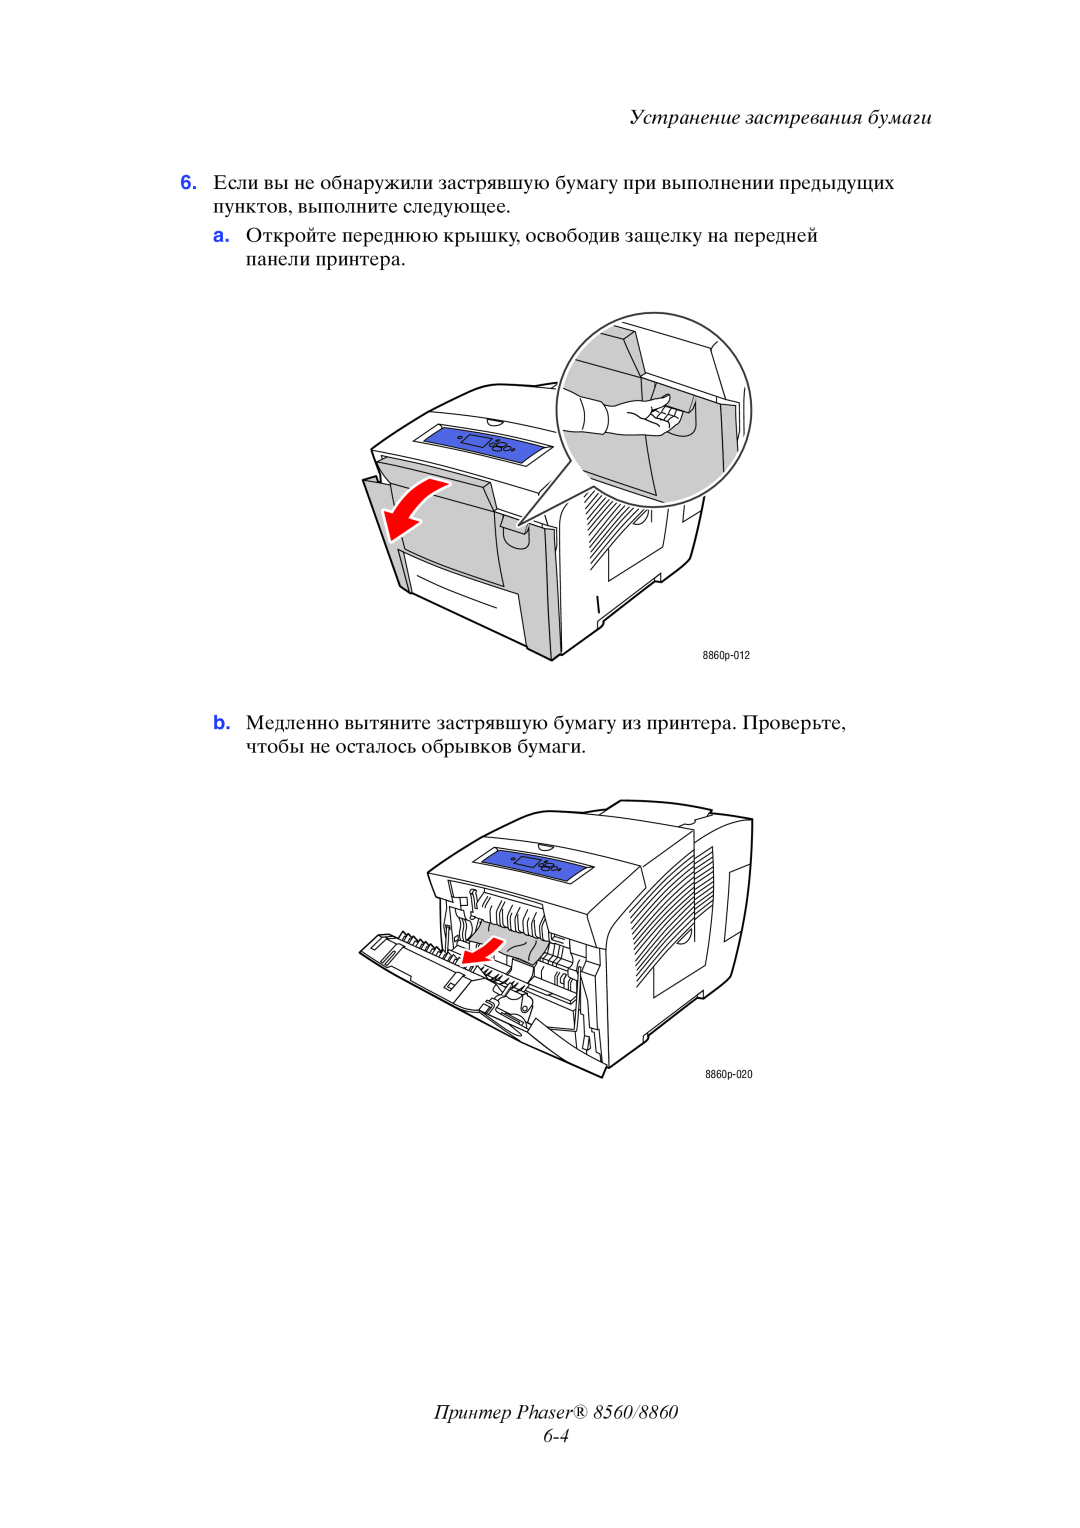 Xerox manual Принтер Phaser 8560/8860 6-4, Устранение застревания бумаги, 8860p-012, 8860p-020 